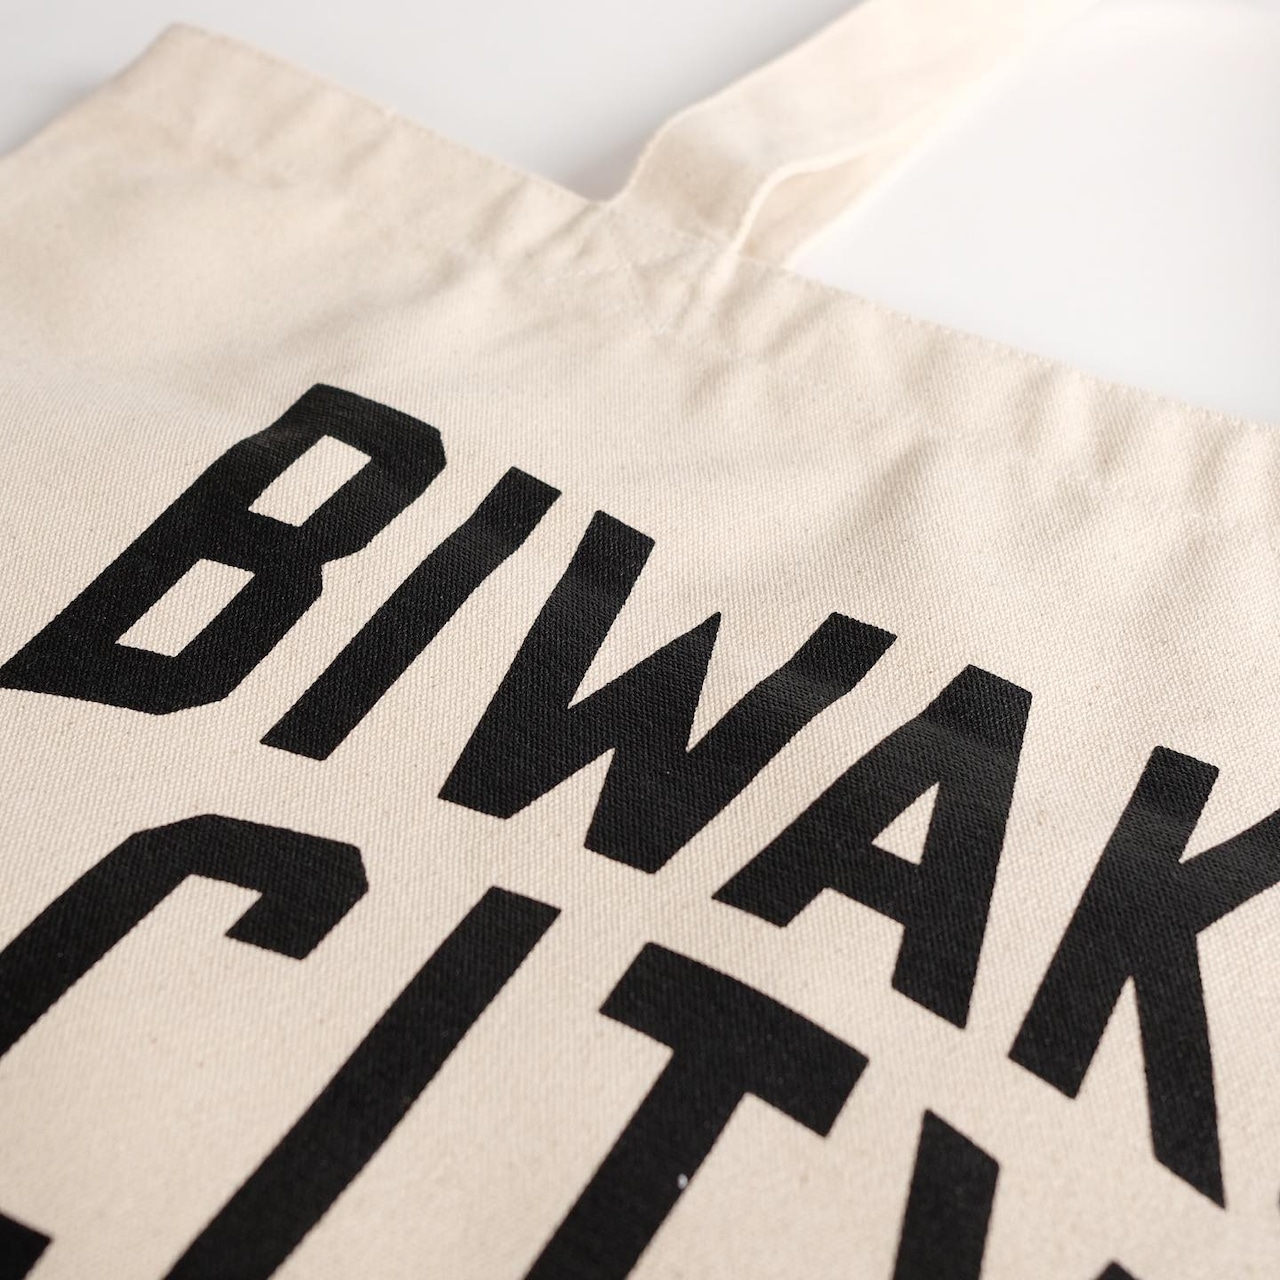 BIWAKO CITY   / BASIC LOGO TOTE BAG